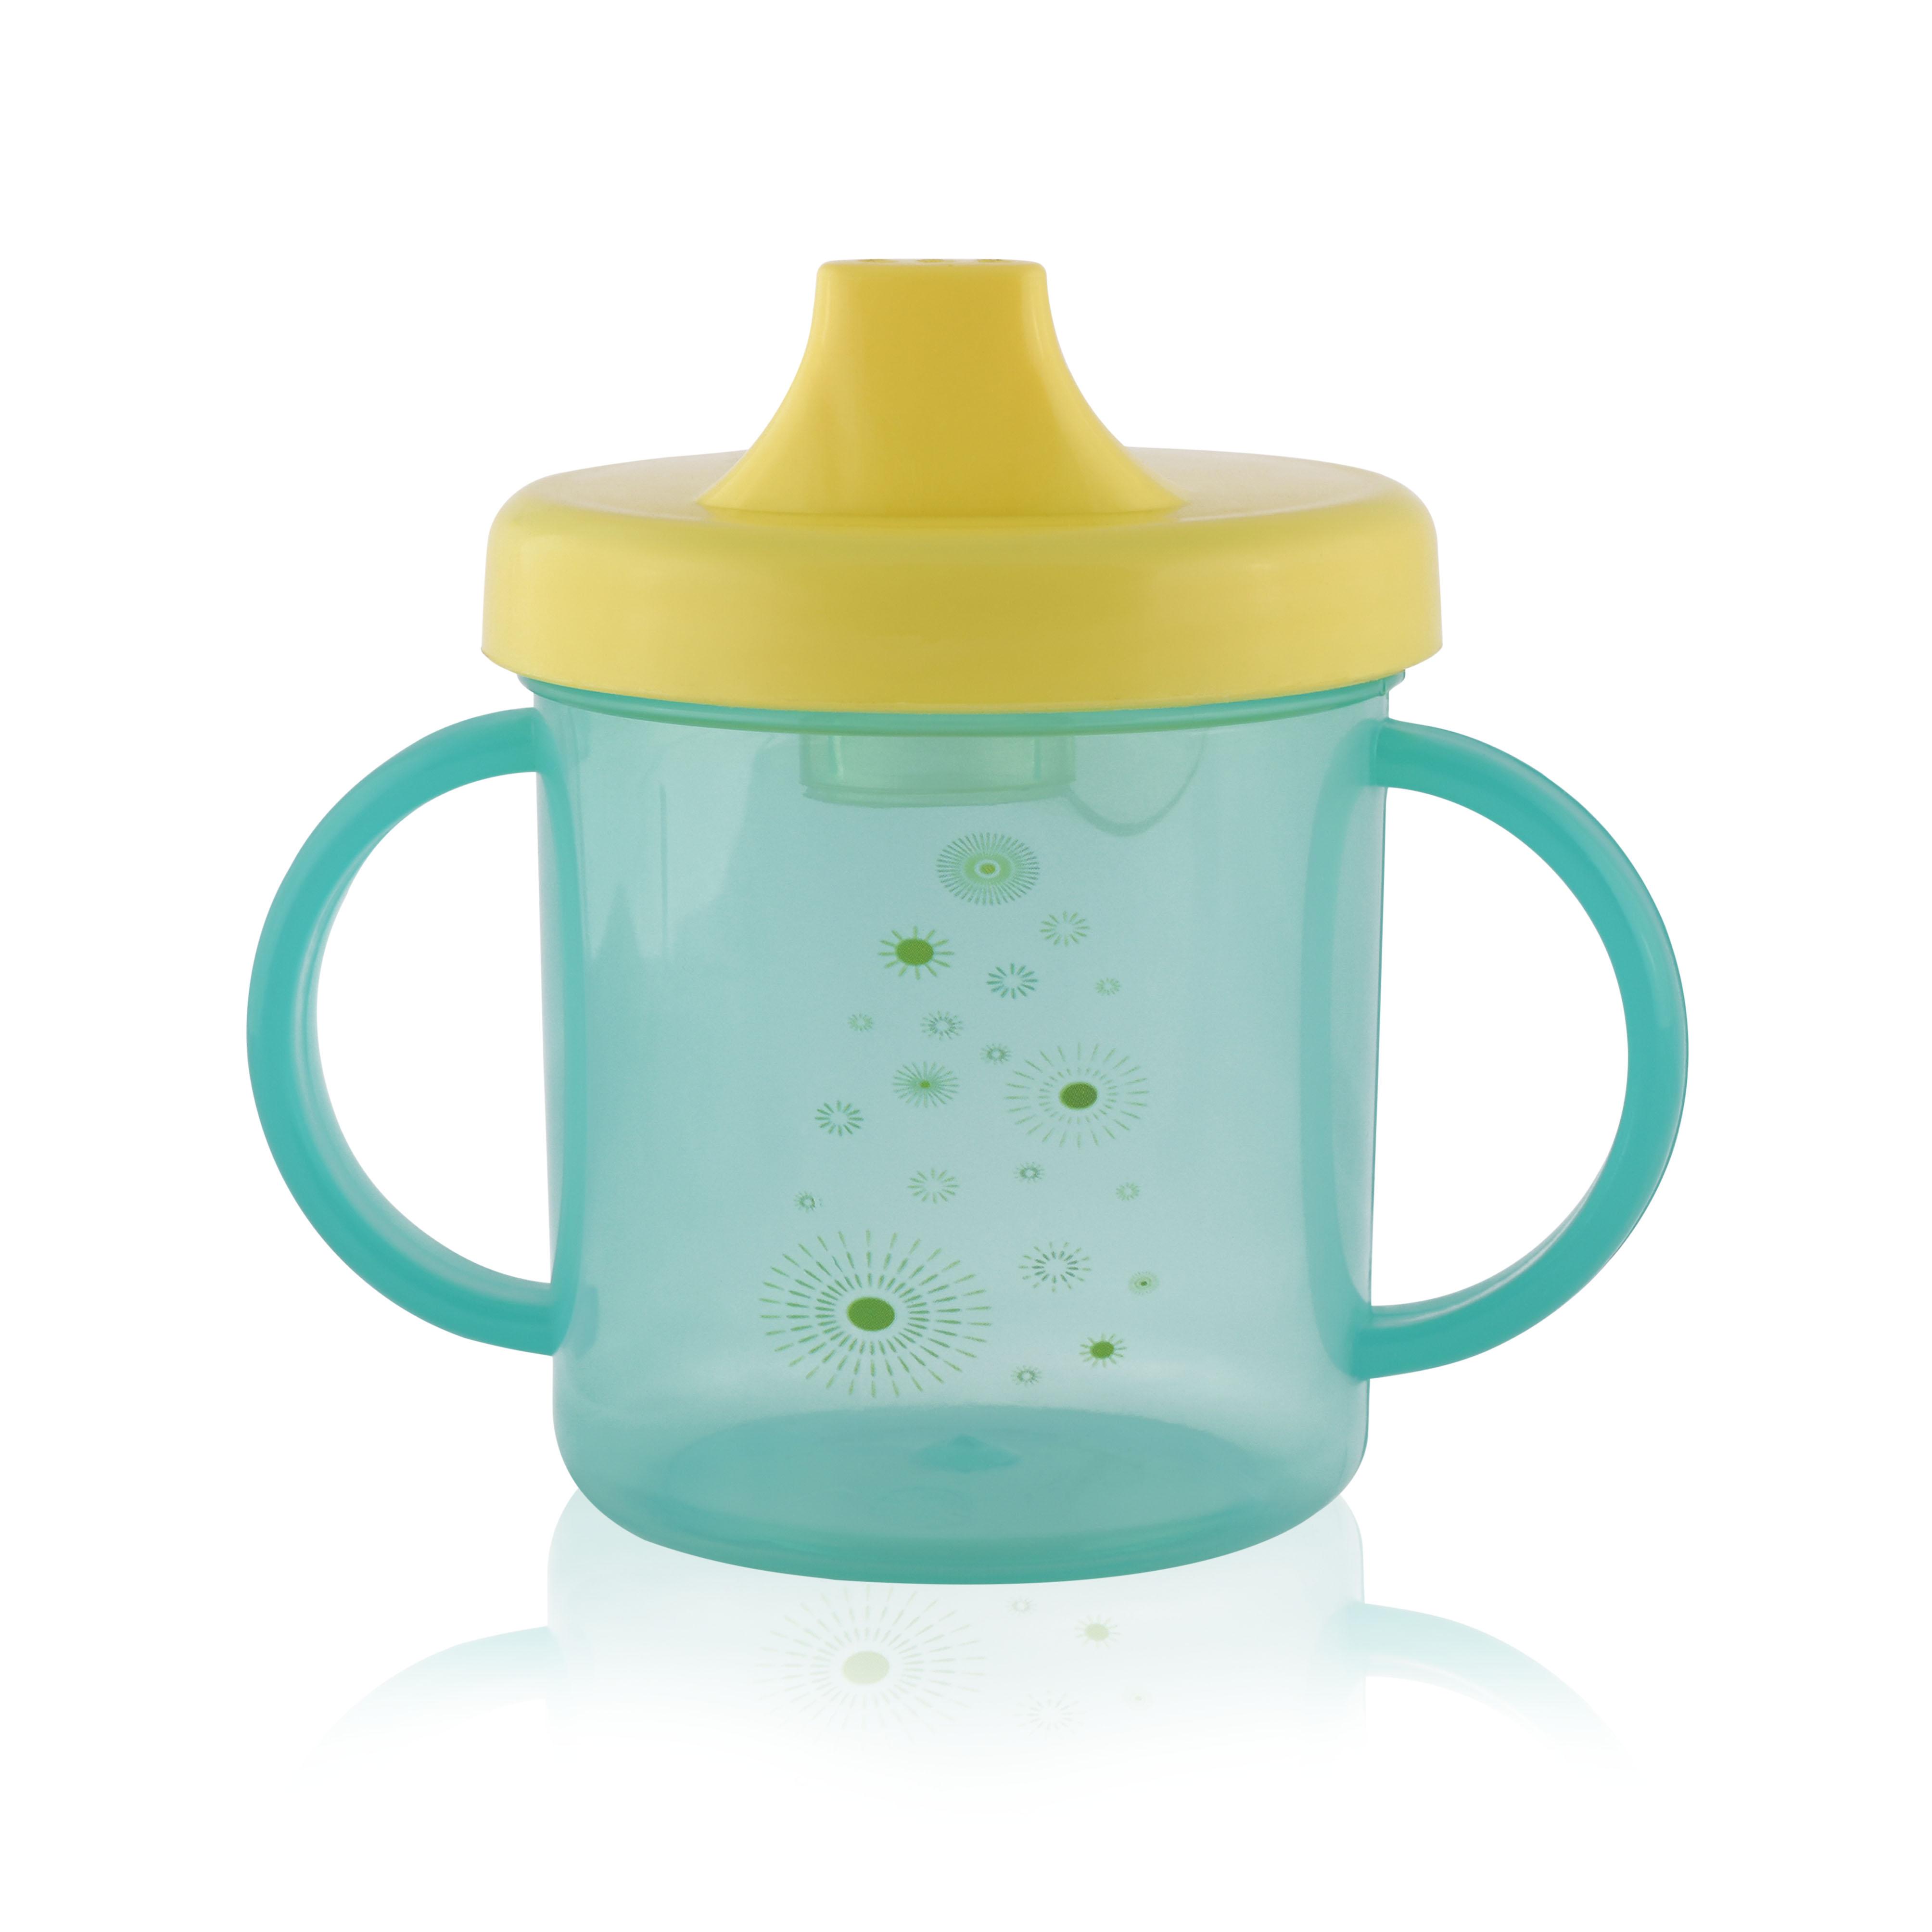 Cana apa bebe - Cana cu manere si cioc, 12 luni+, 210 ml, Green, bebelorelli.ro